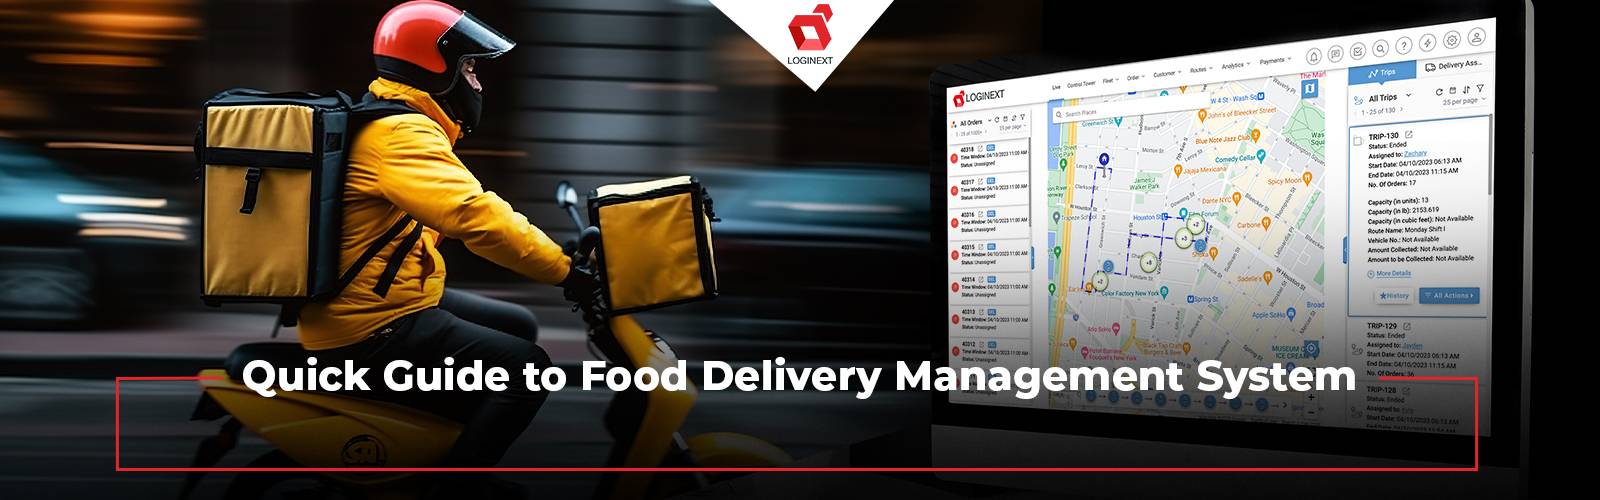 Whitepaper: Kurzanleitung zum Food Delivery Management System